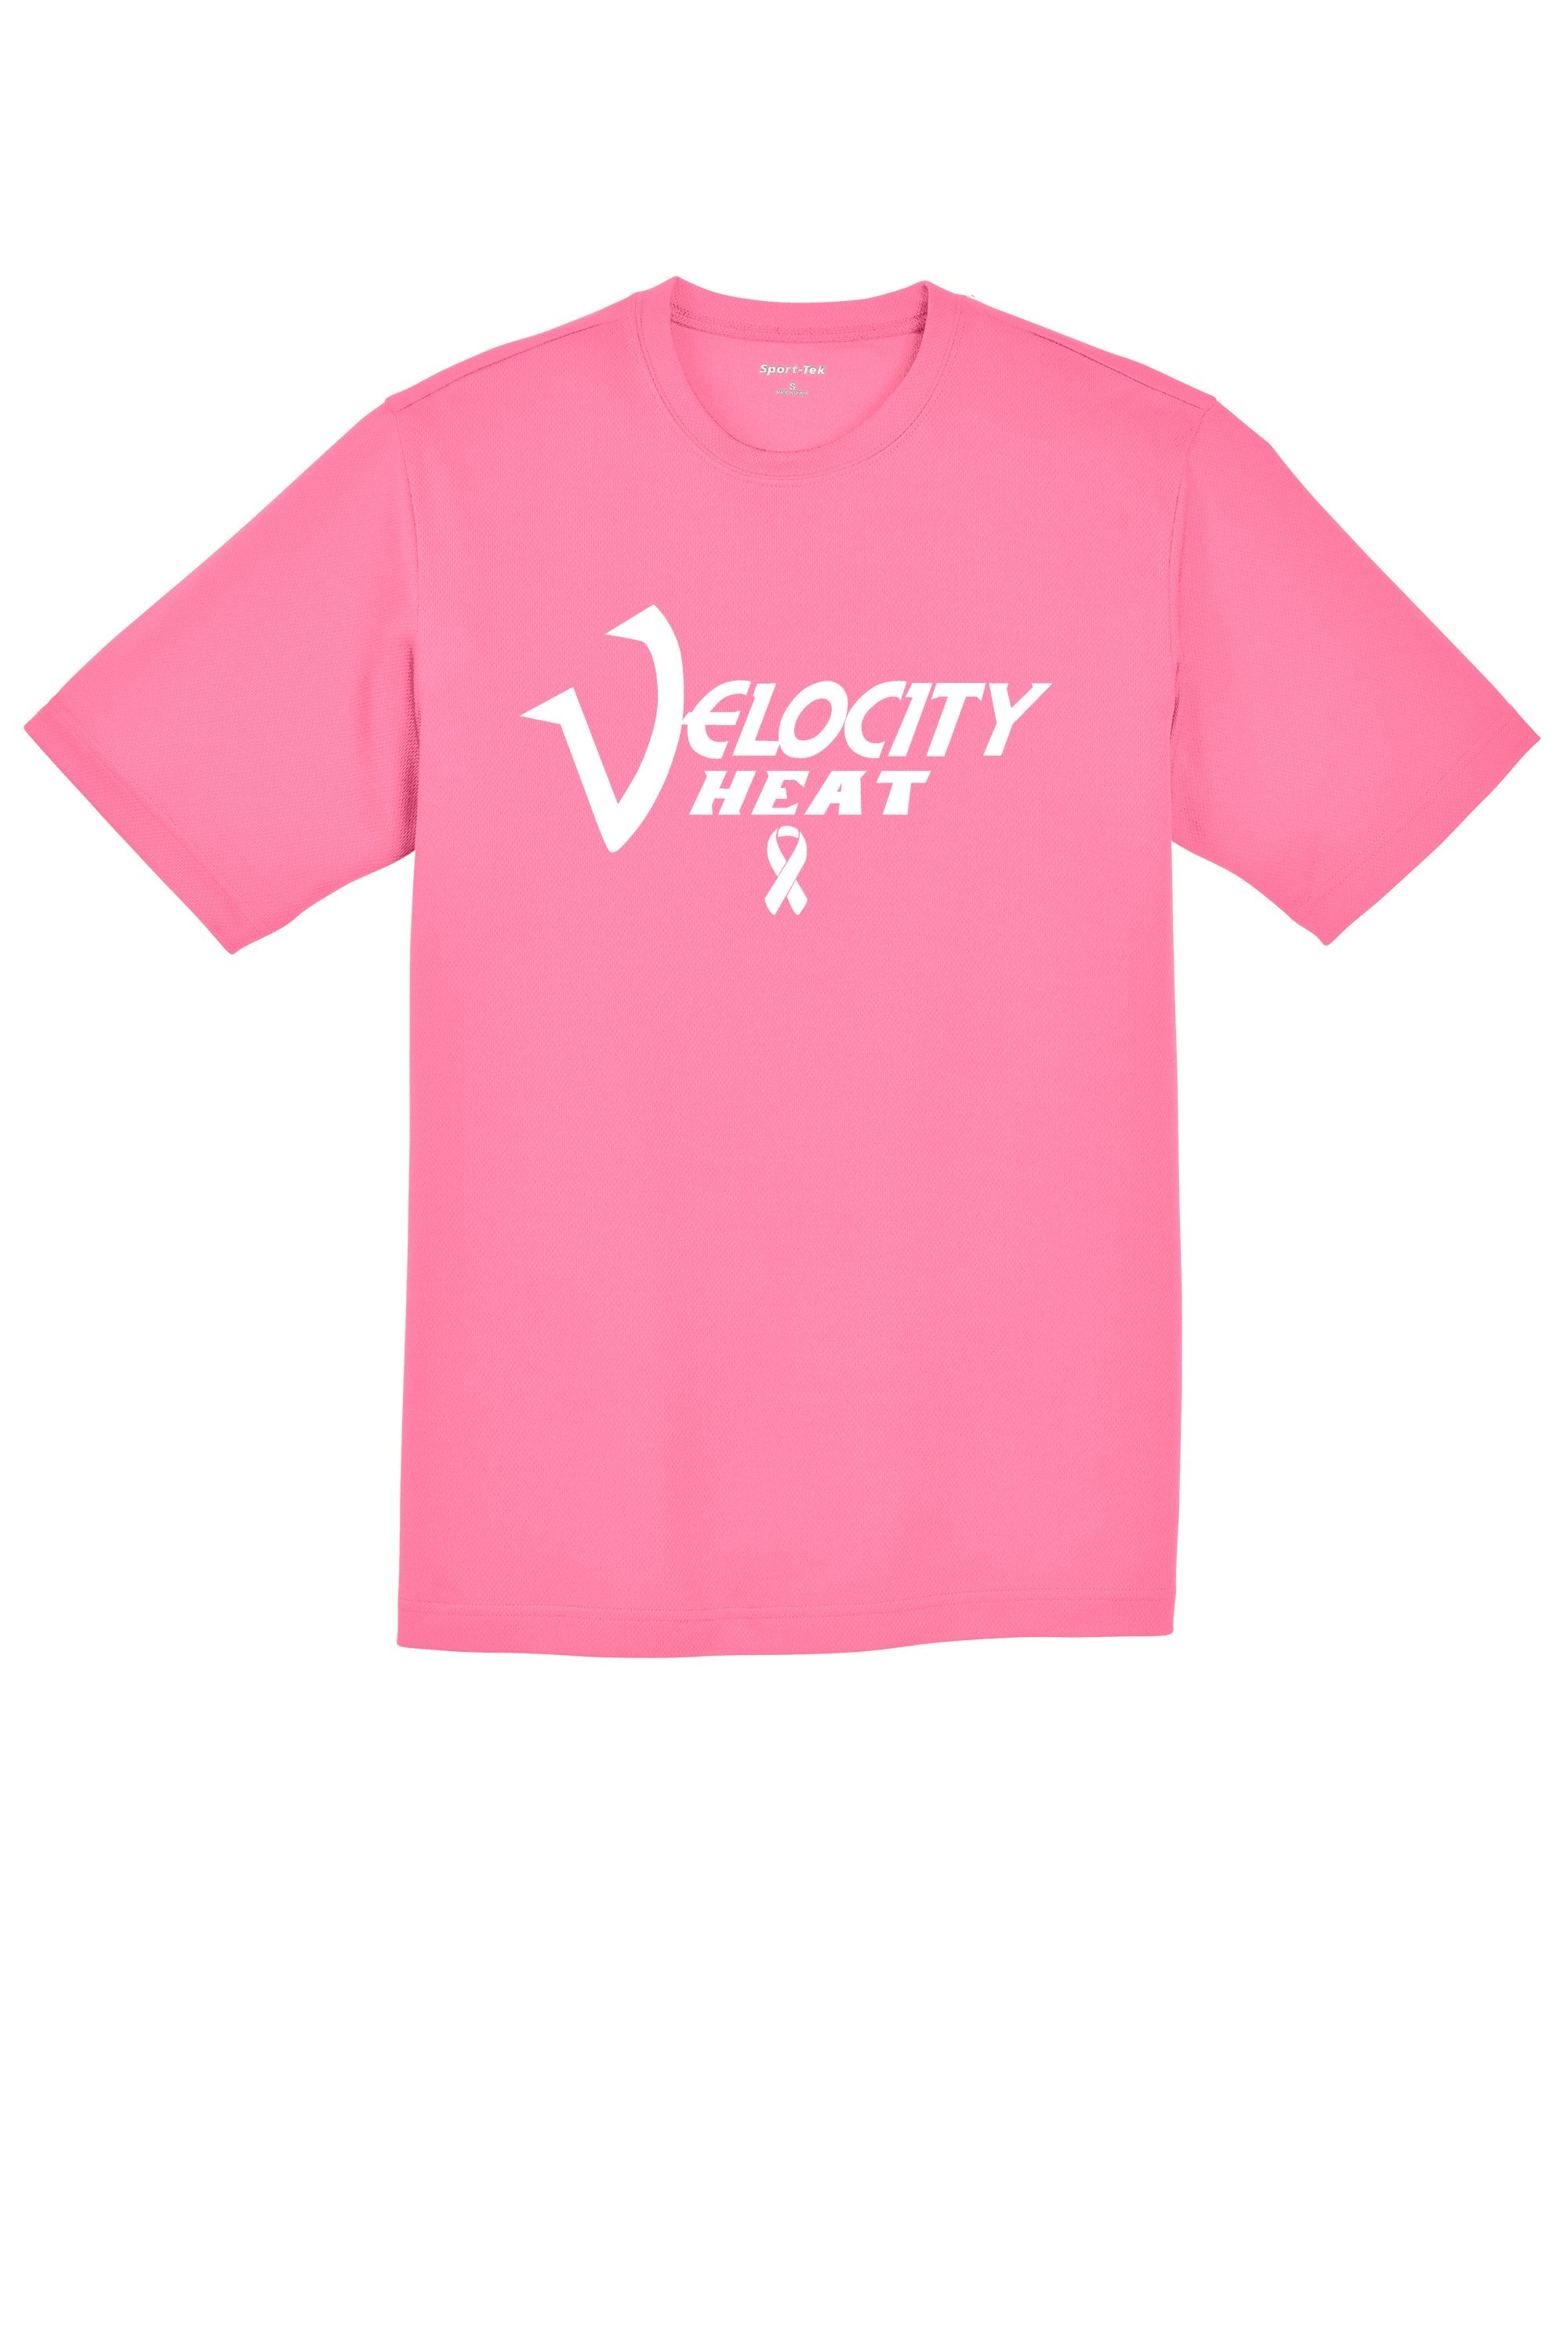 Velocity Heat Men's Breast Cancer Shirt